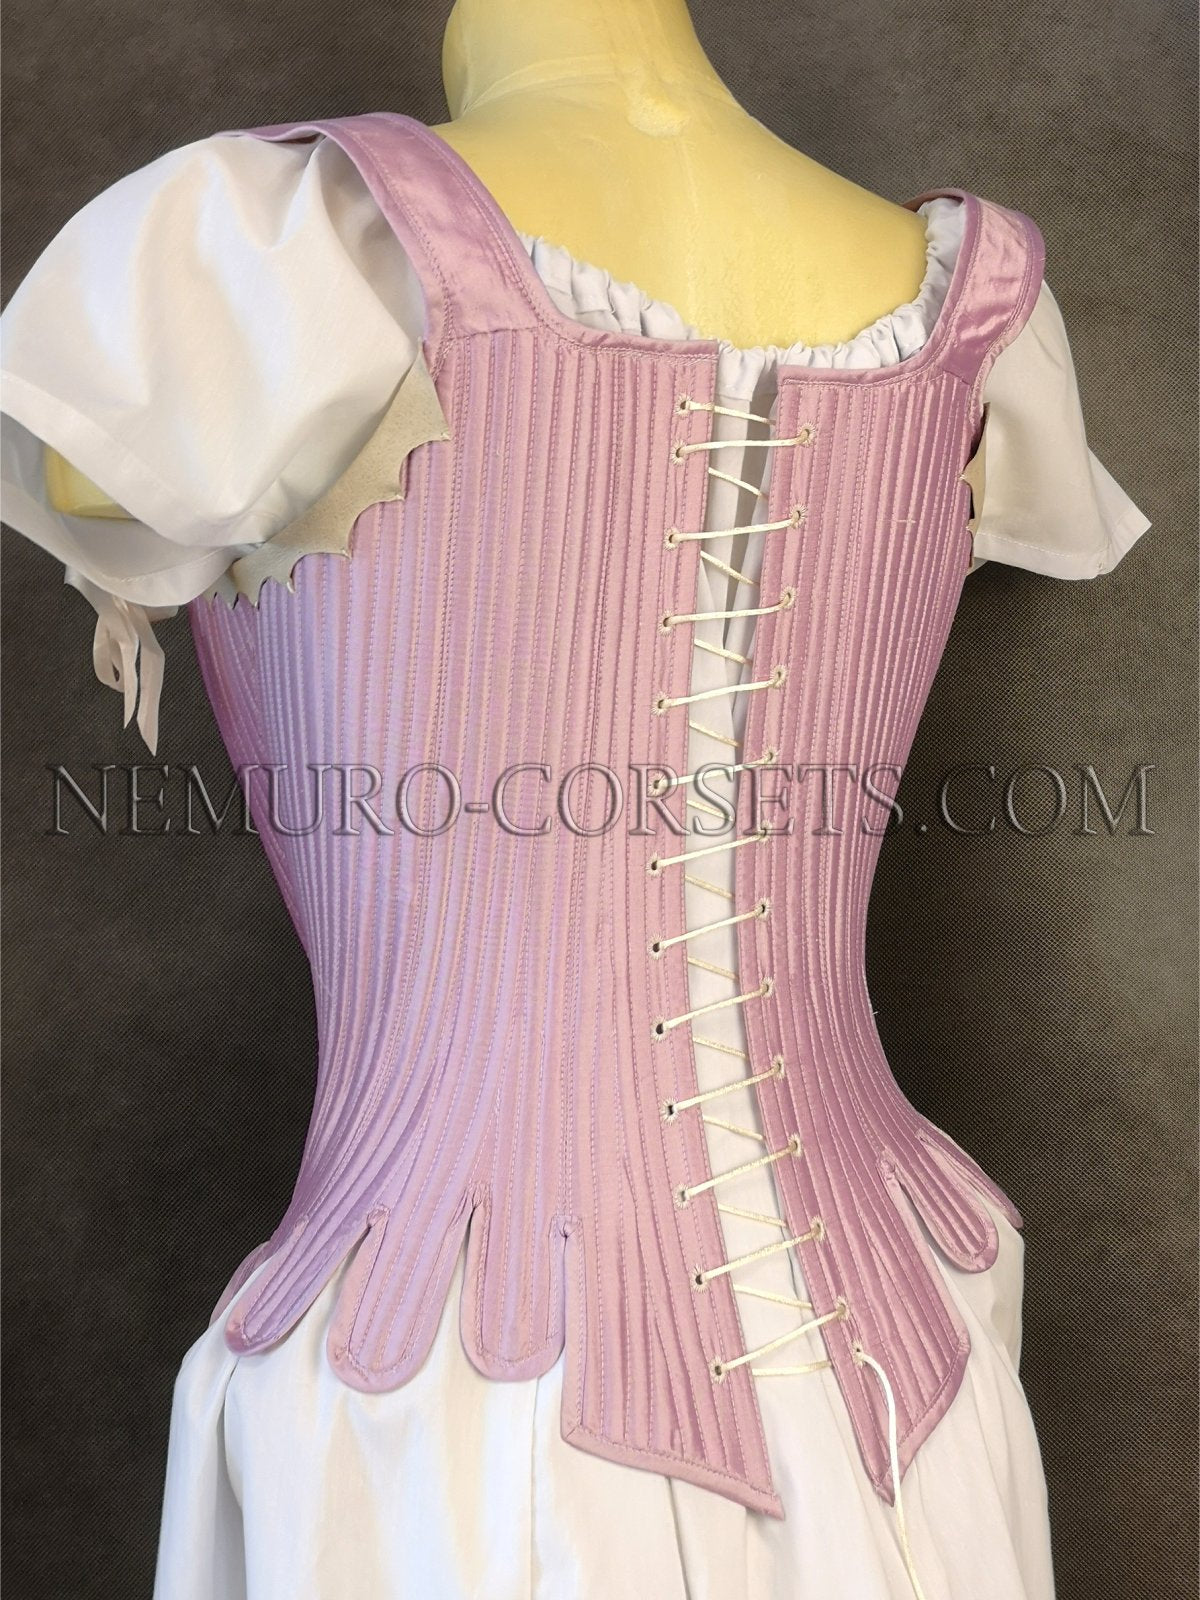 18th century half boned stays corset - Custom at Nemuro-Corsets